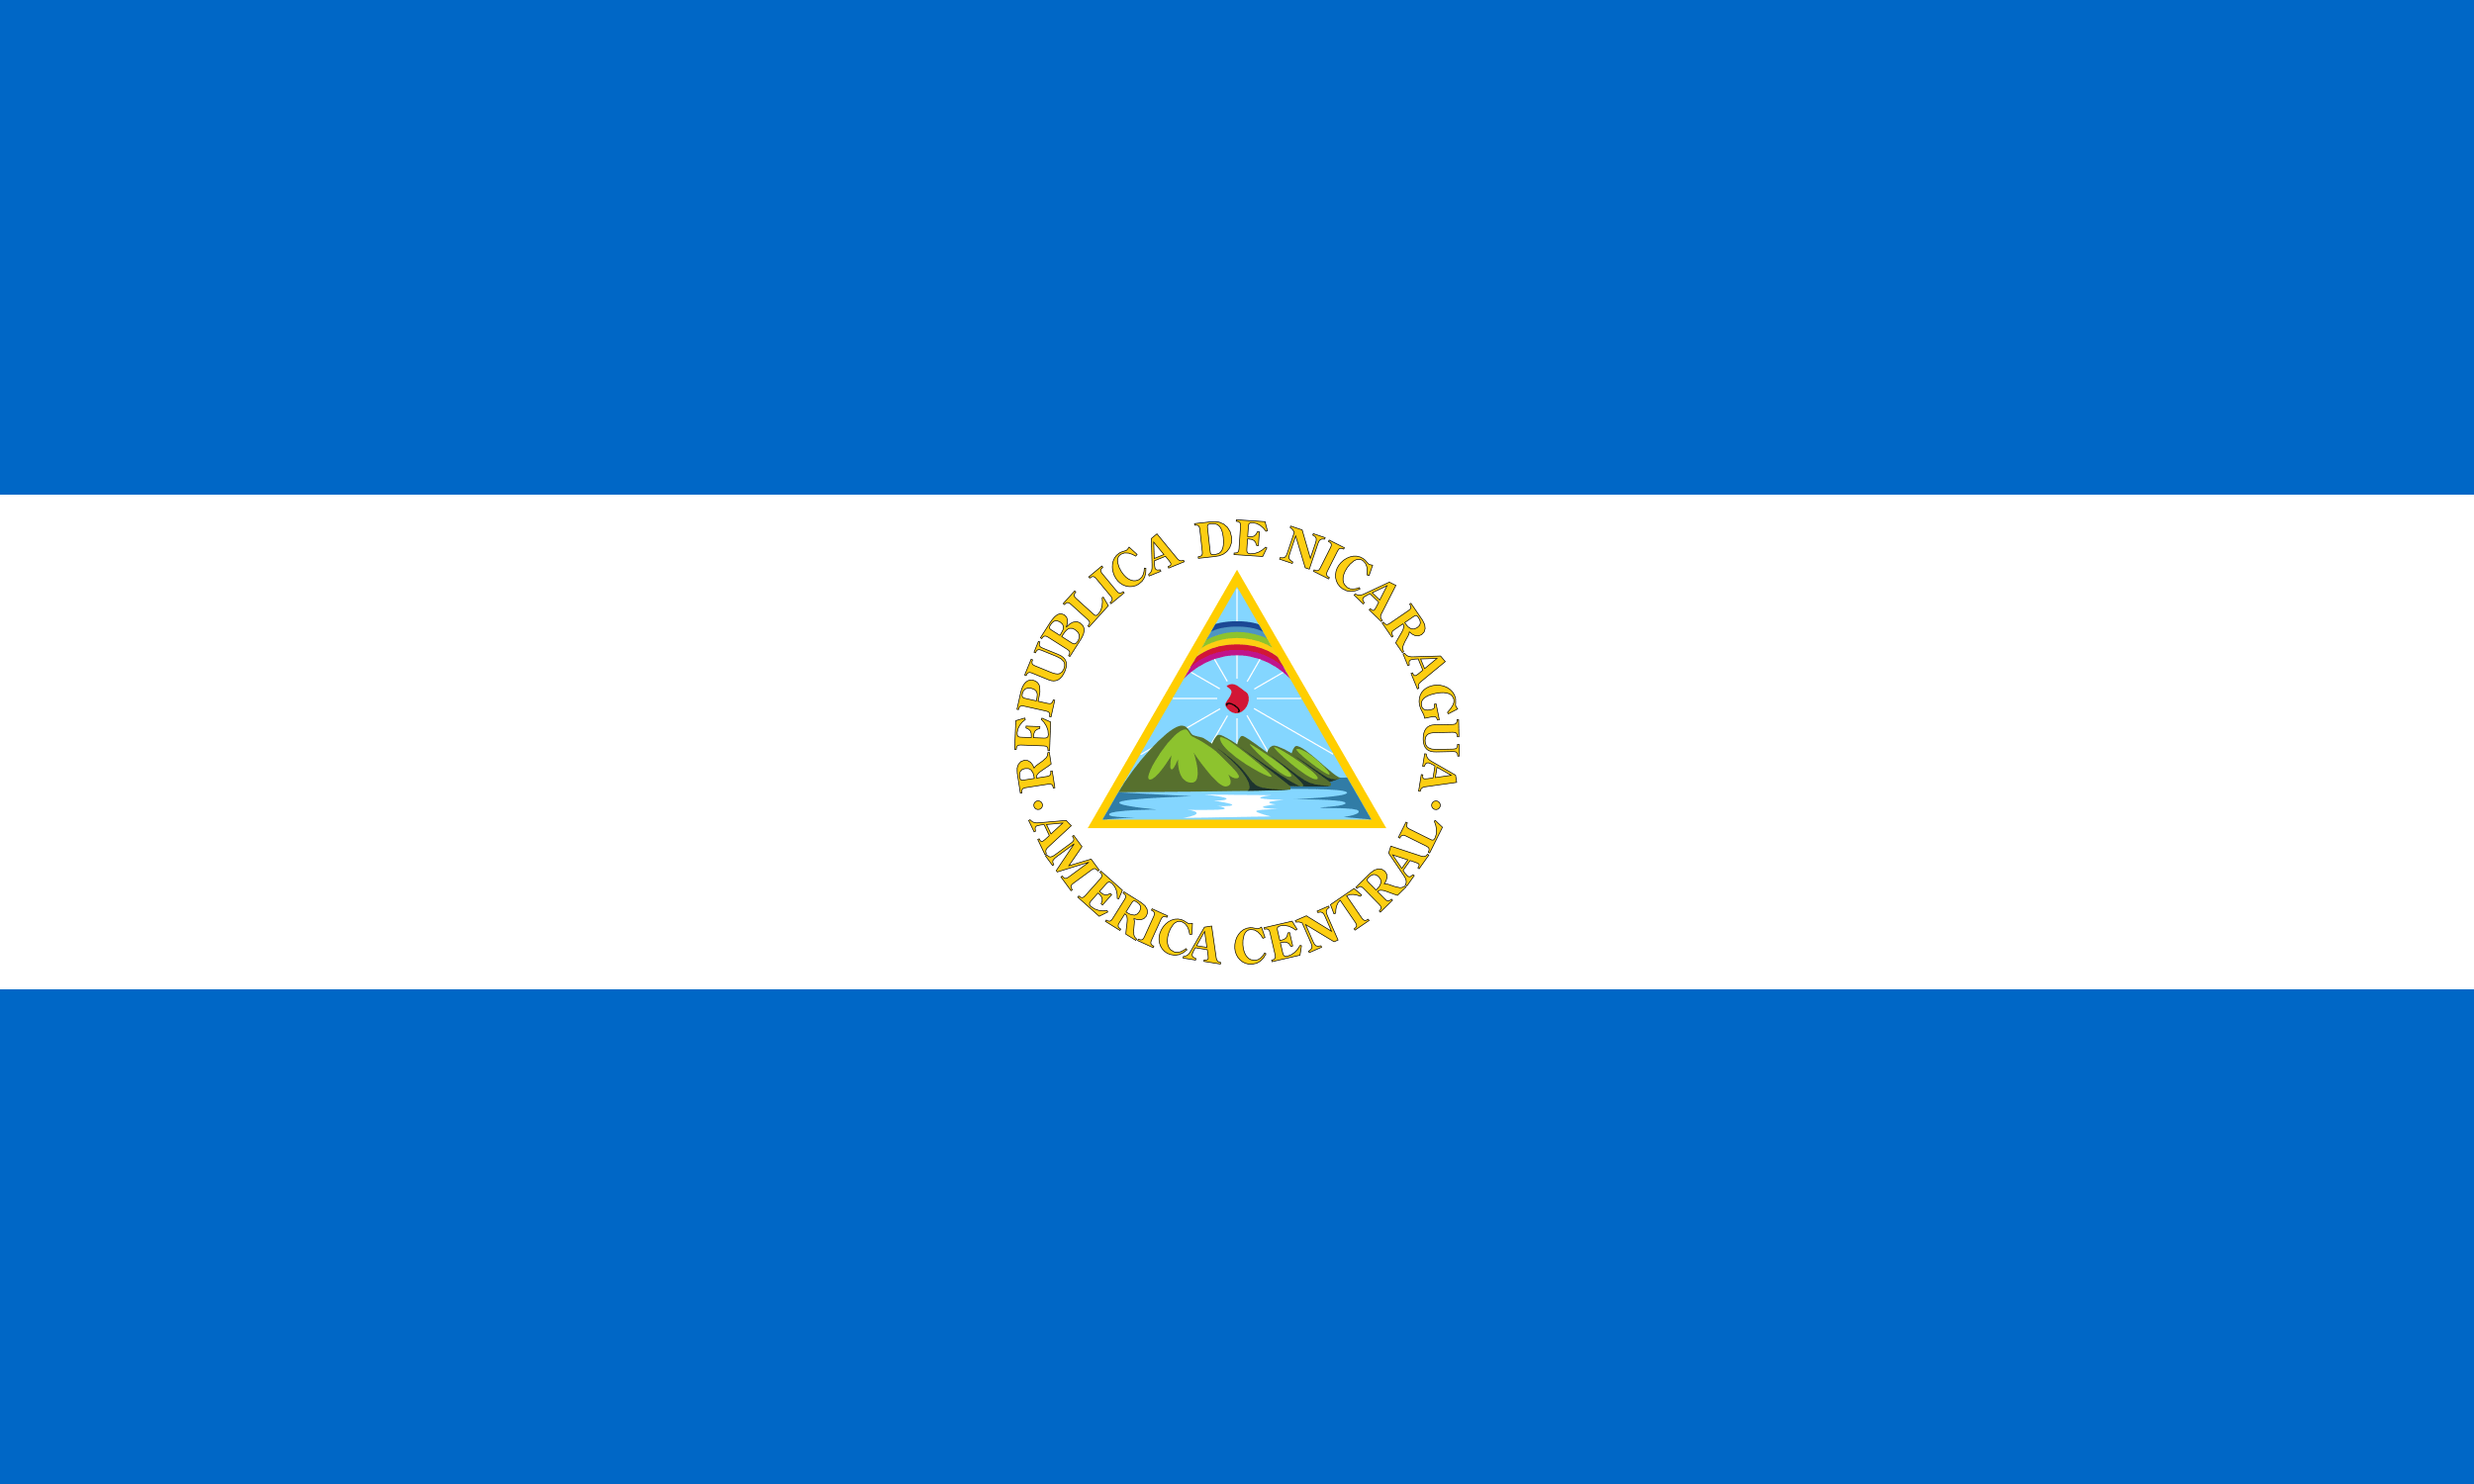 the image shows the nicaraguan flag